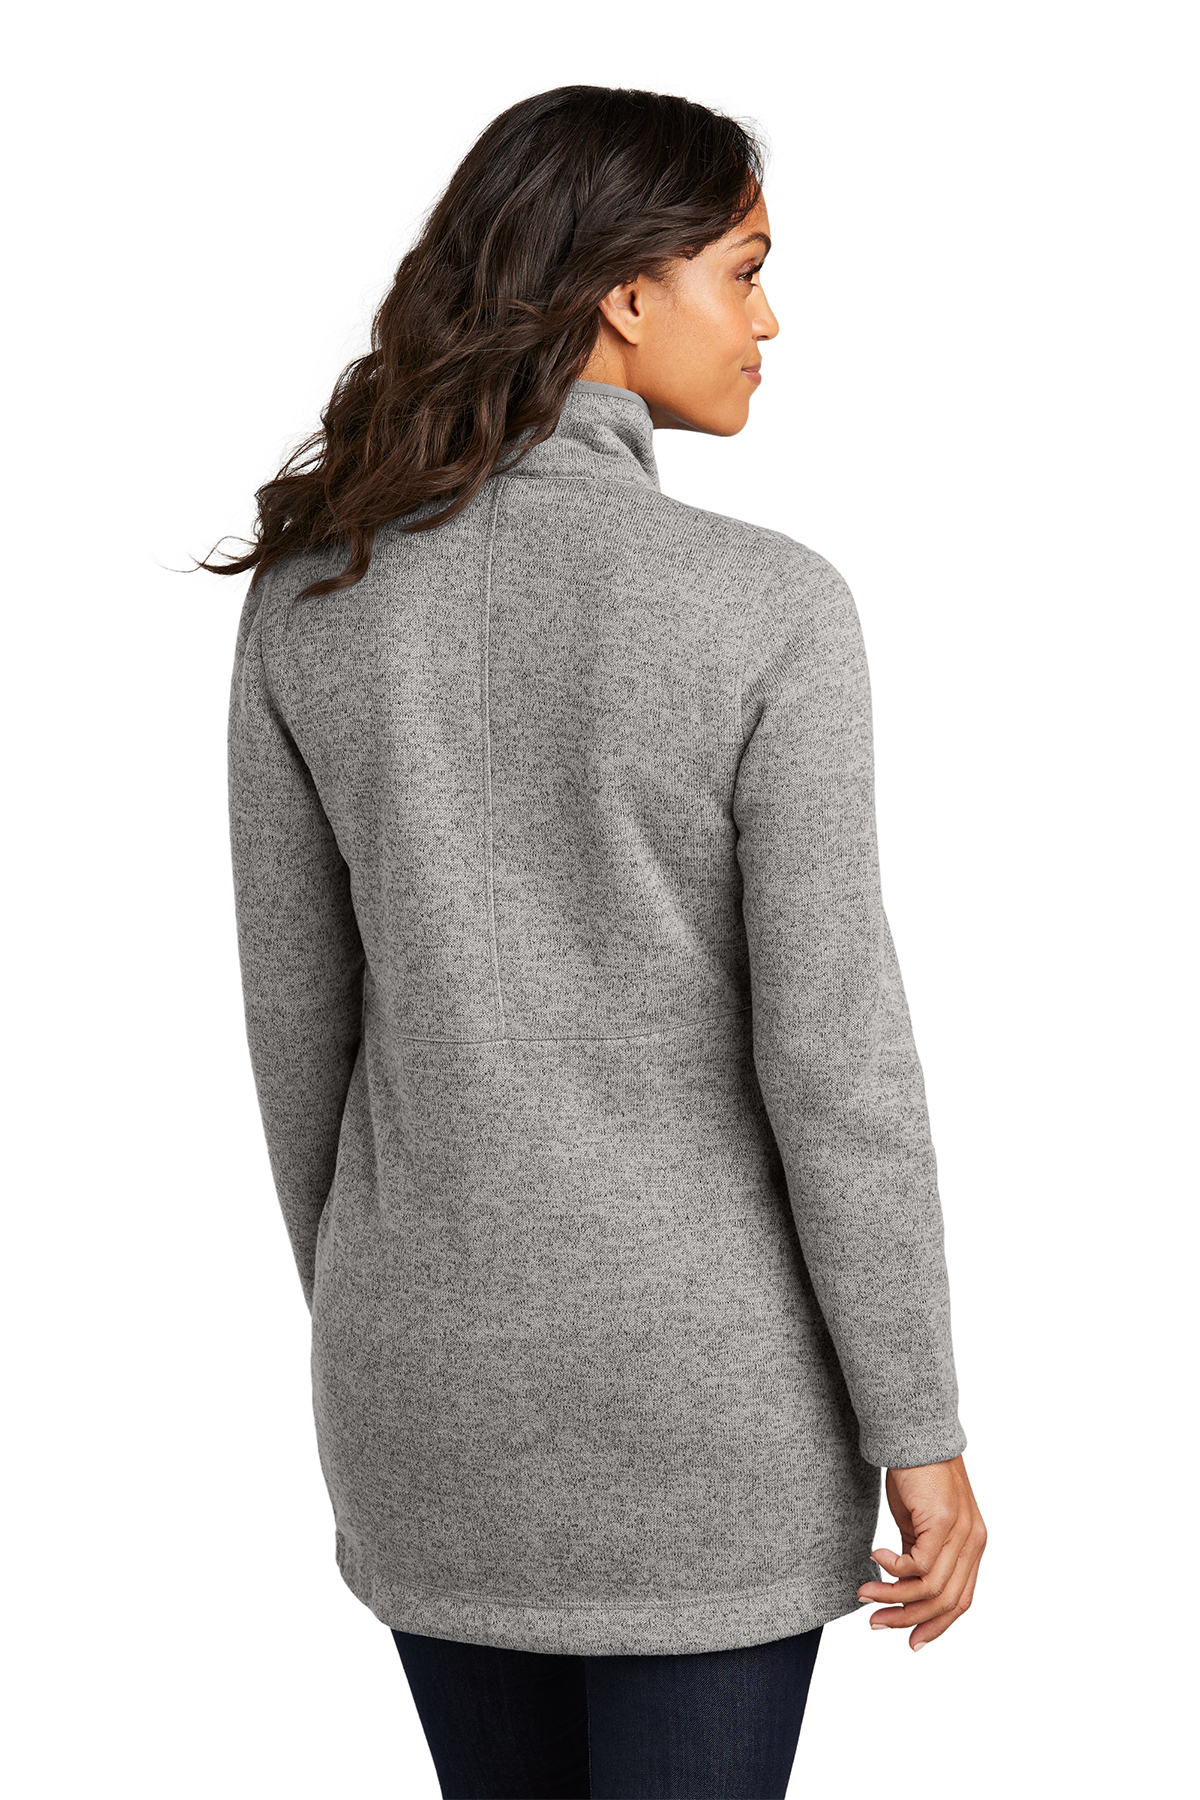 Port Authority Ladies Arc Sweater Fleece Long Jacket | Product | SanMar